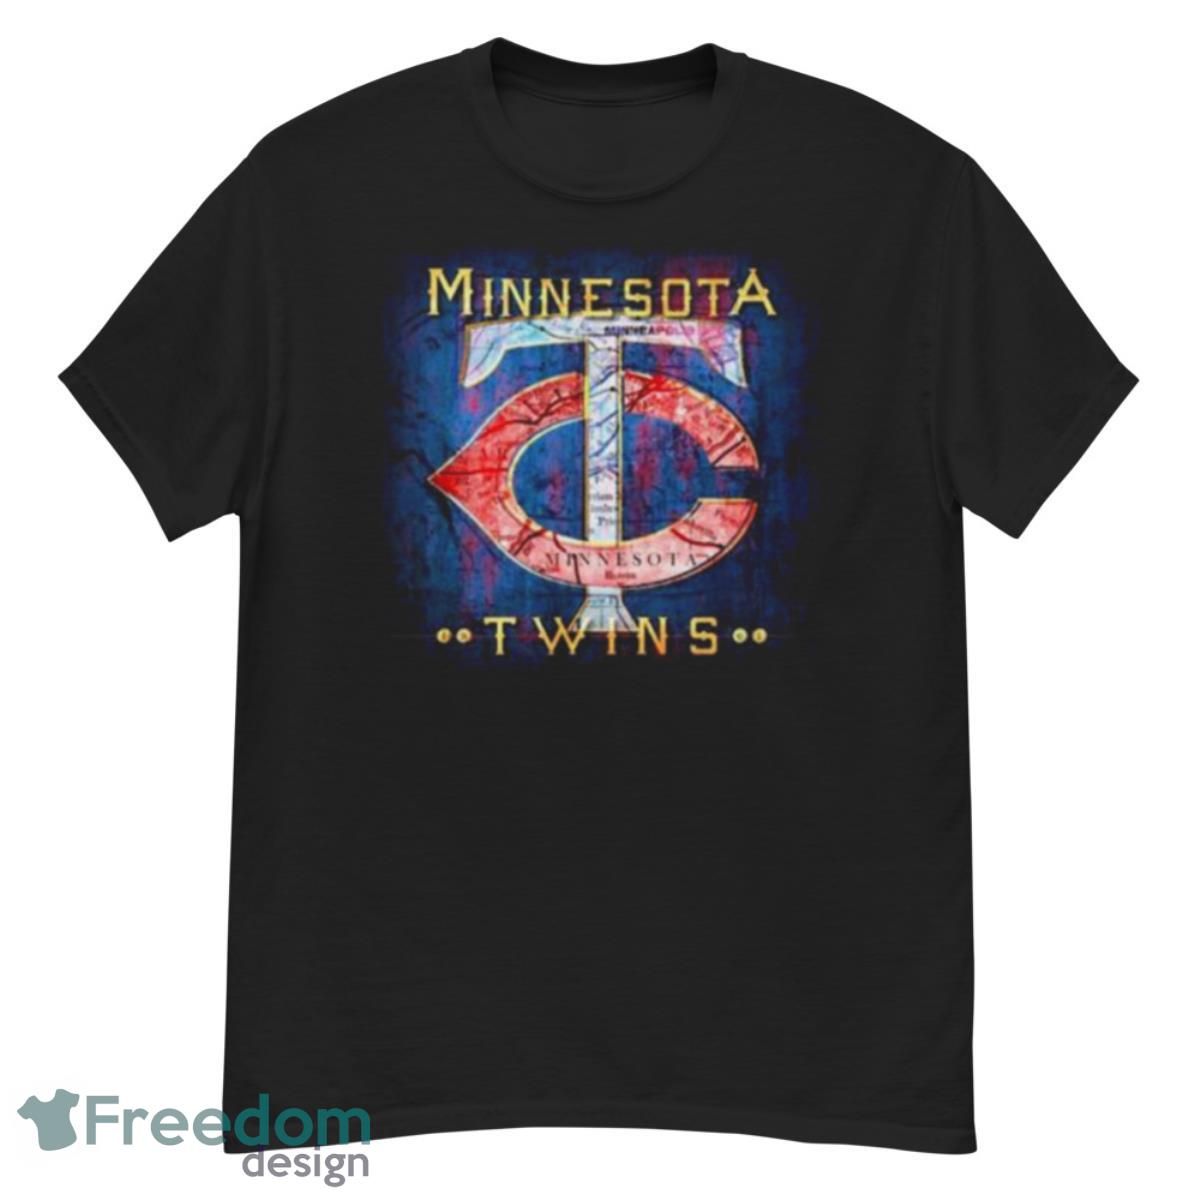 MLB World Tour Minnesota Twins baseball logo 2023 shirt, hoodie